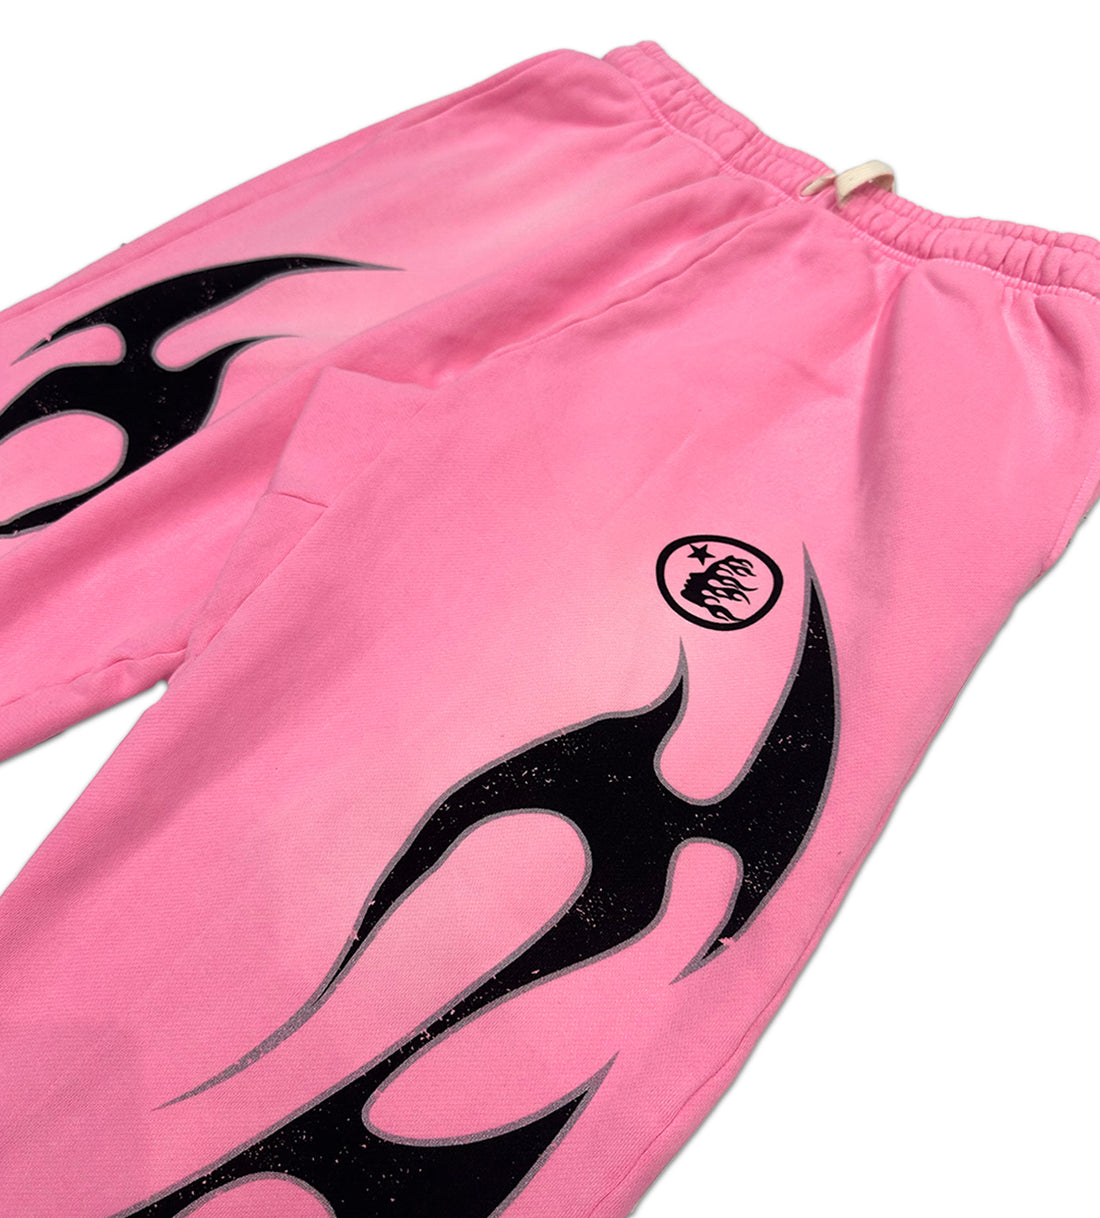 Hellstar Studios Pink Flame Sweatpants – Restock AR